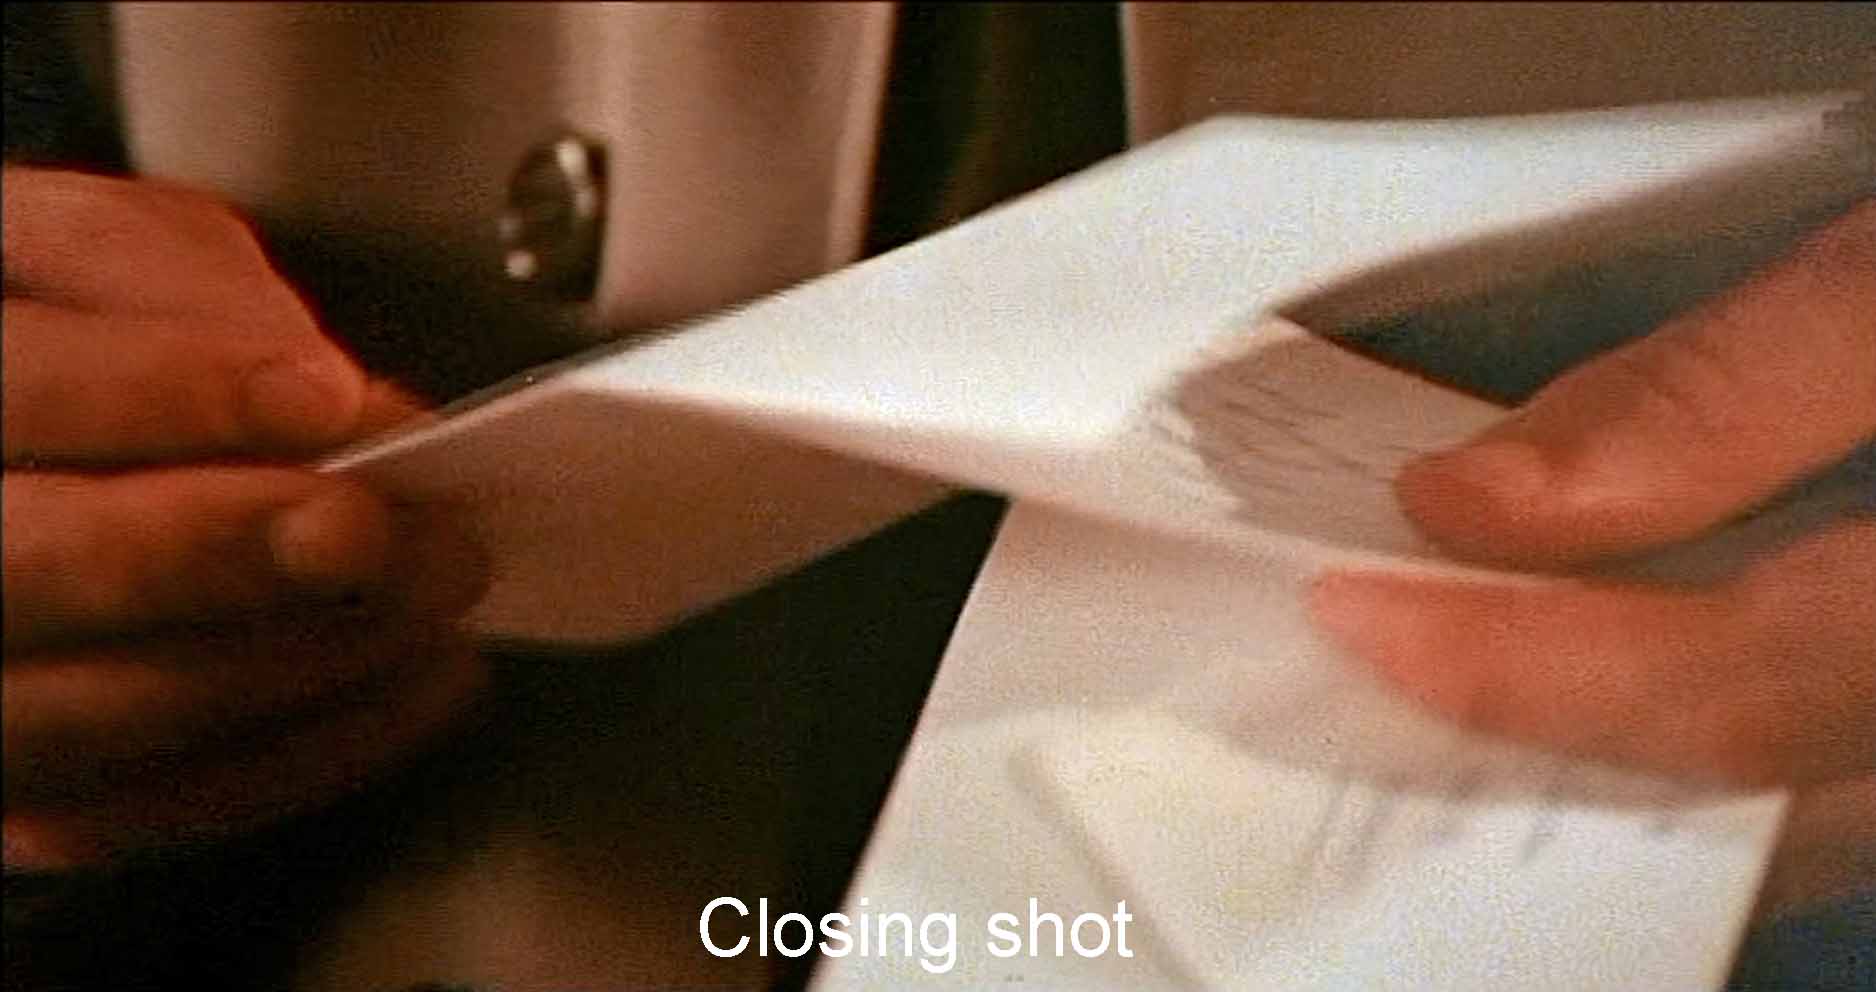 Closing shot